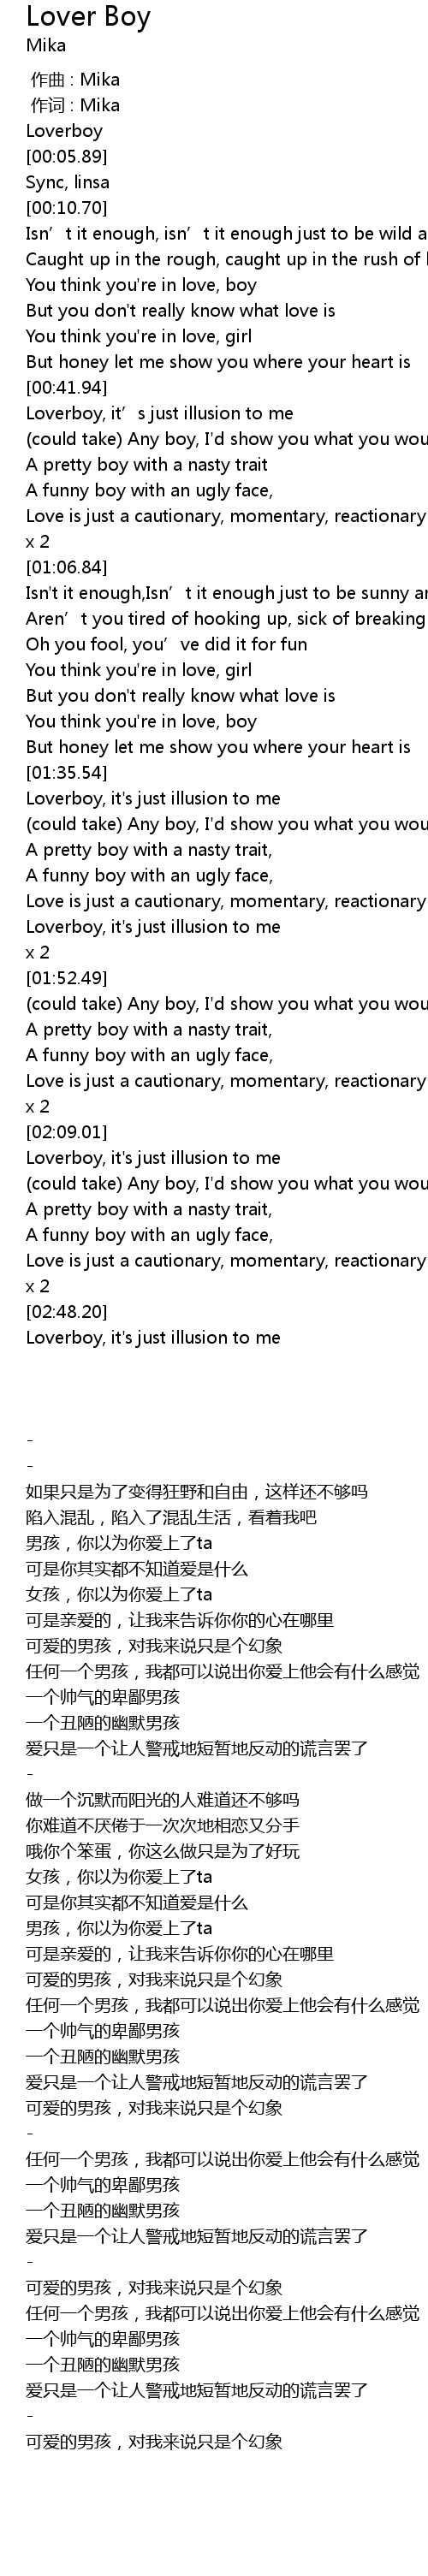 Lover Boy Lyrics Follow Lyrics